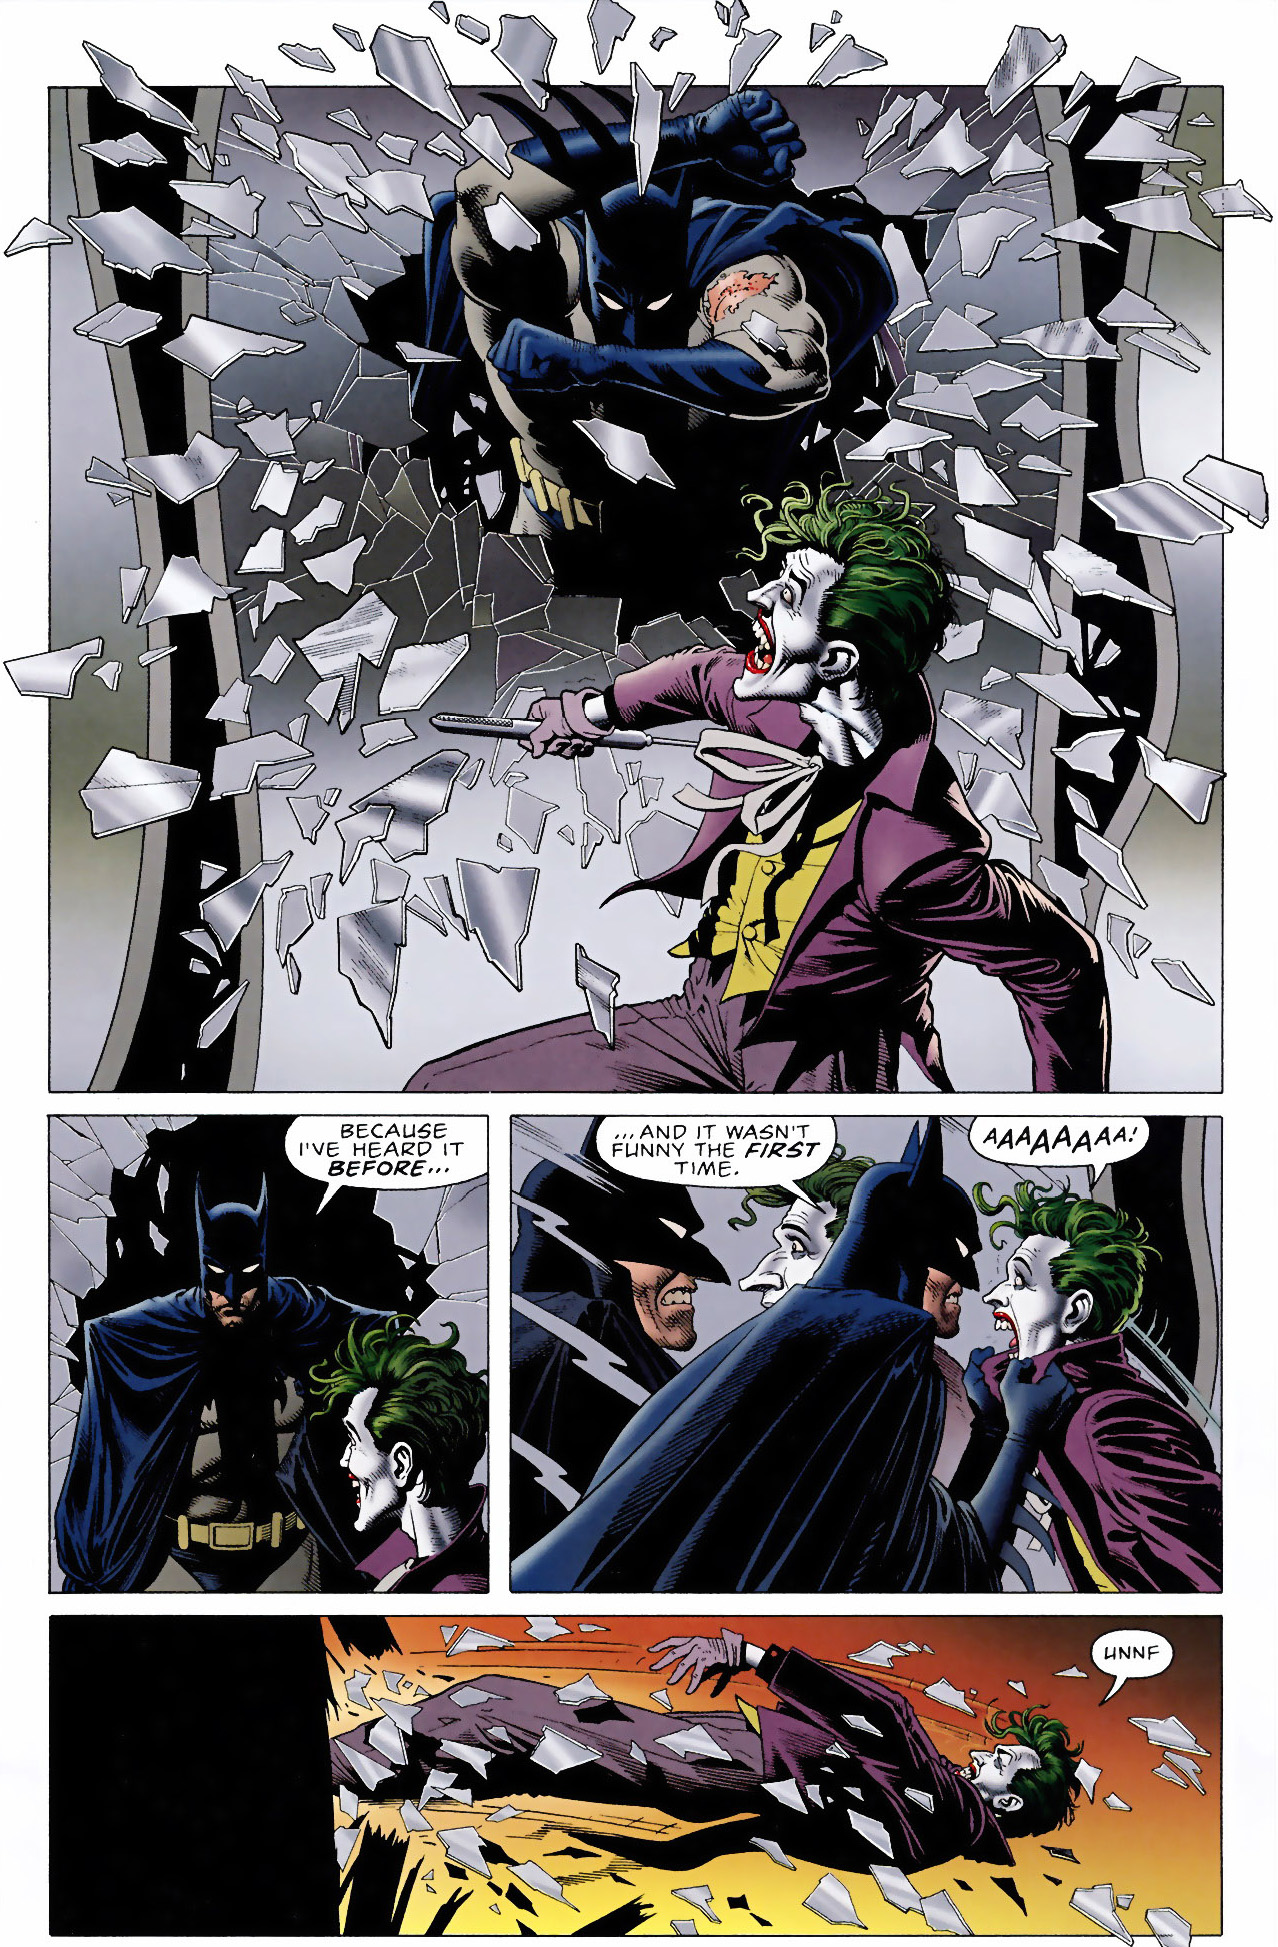 batman vs the joker (killing joke)